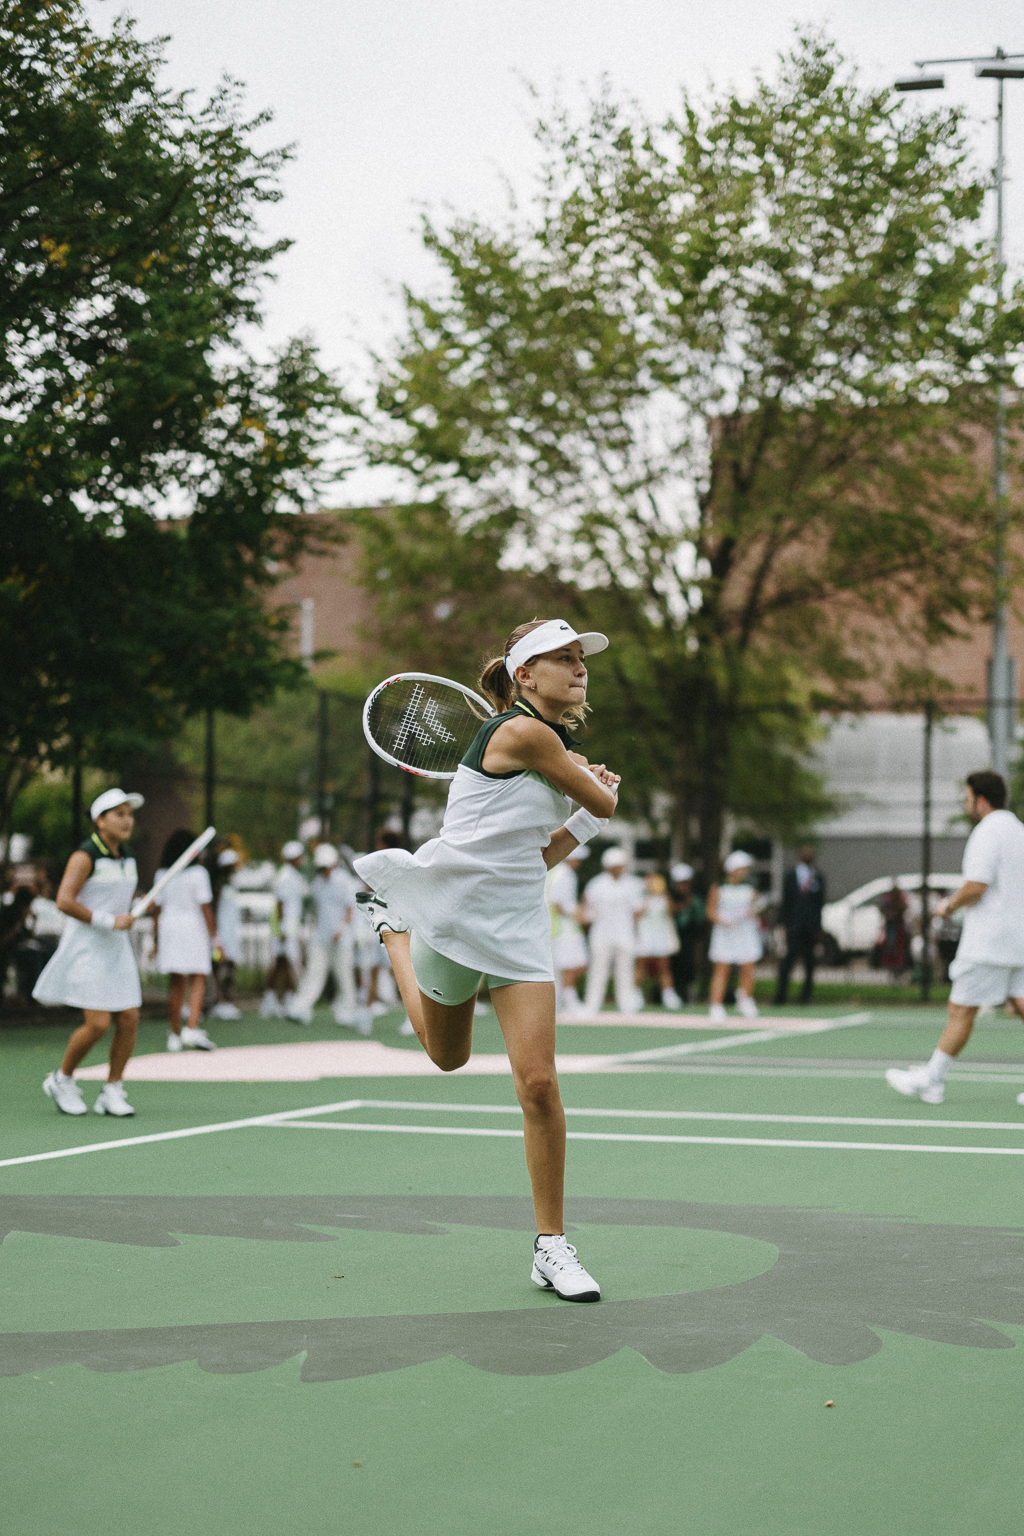 terrain de tennis Lacoste New York City bronx venus williams joueuse de tennis